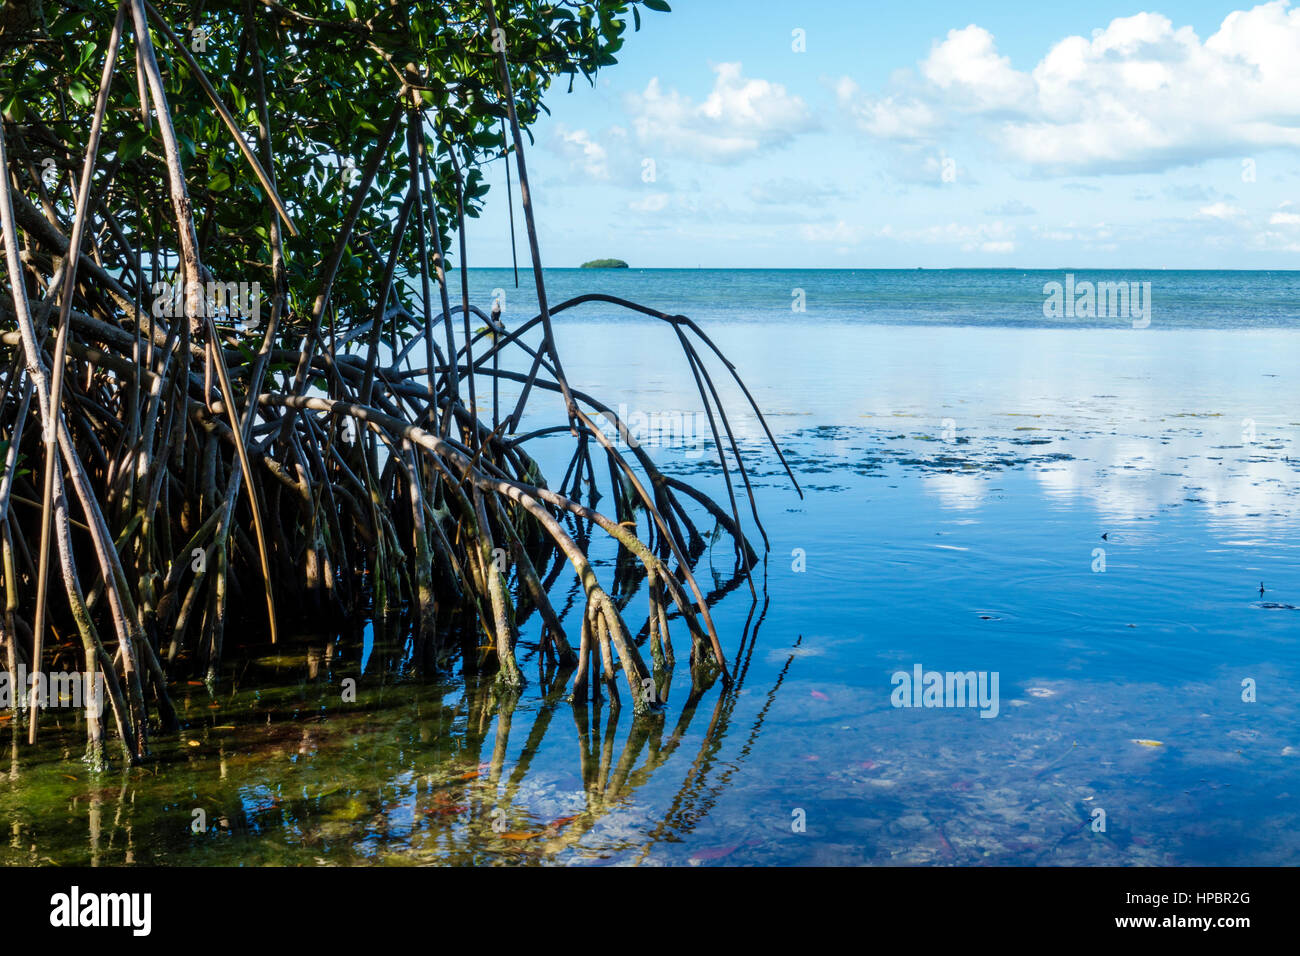 Florida Key Largo,Upper Florida Keys,Florida Bay,Florida Keys Wild Bird Center,Laura Quinn Sanctuary,refuge,red mangrove,Rhizophora mangle,water,refle Stock Photo